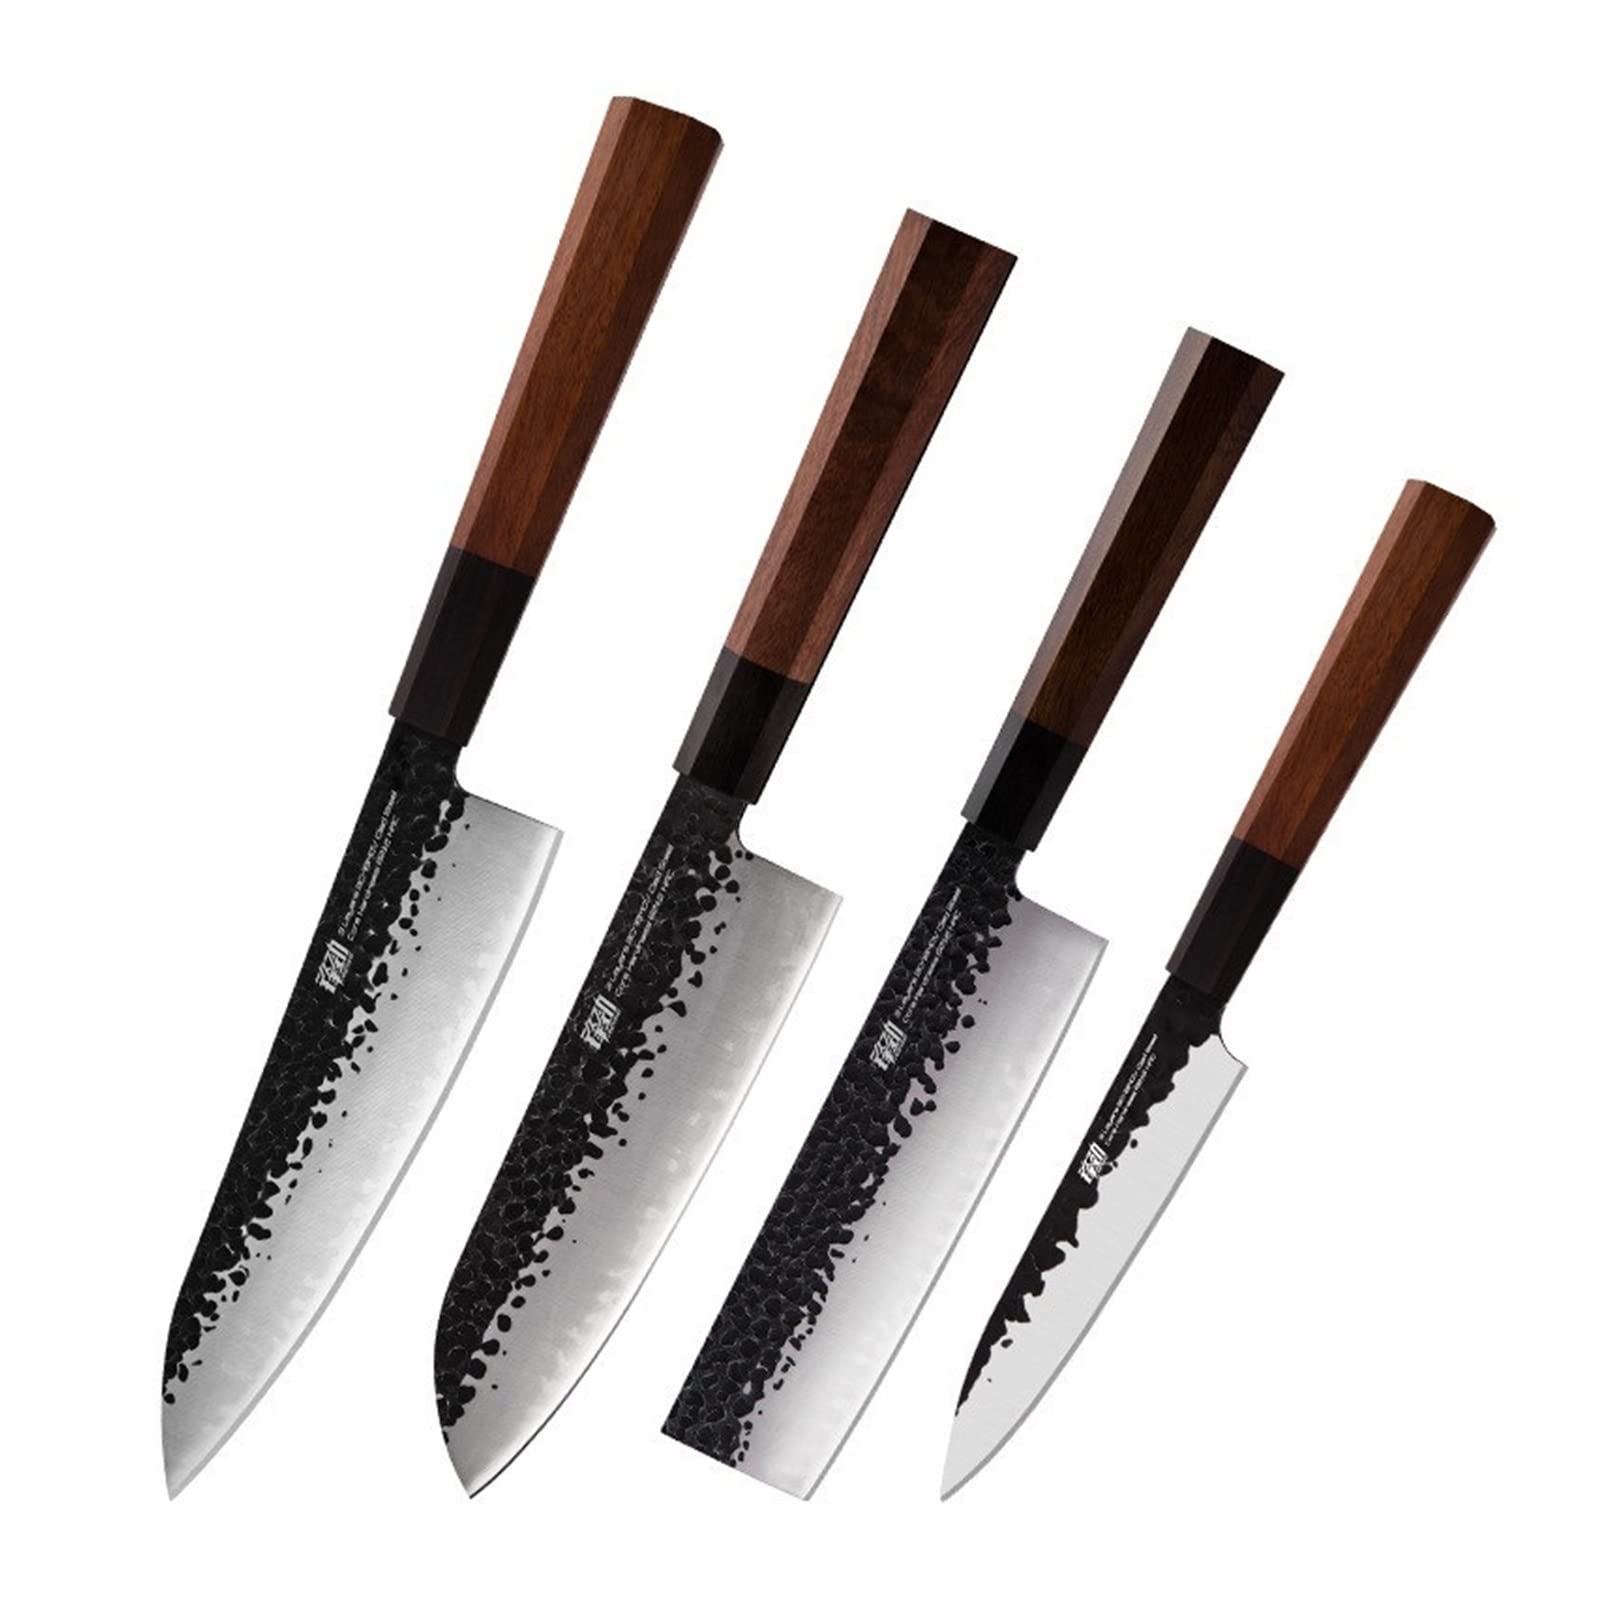 4pcs Küchenmesser Set 3 Schichten gekleideter Stahlkoch Gyutou Nakiri Utility Cleaver Japanischer Santoku -Messer Oktagonal Griff küchenmesser set (Color : 4PCS Knives Set)